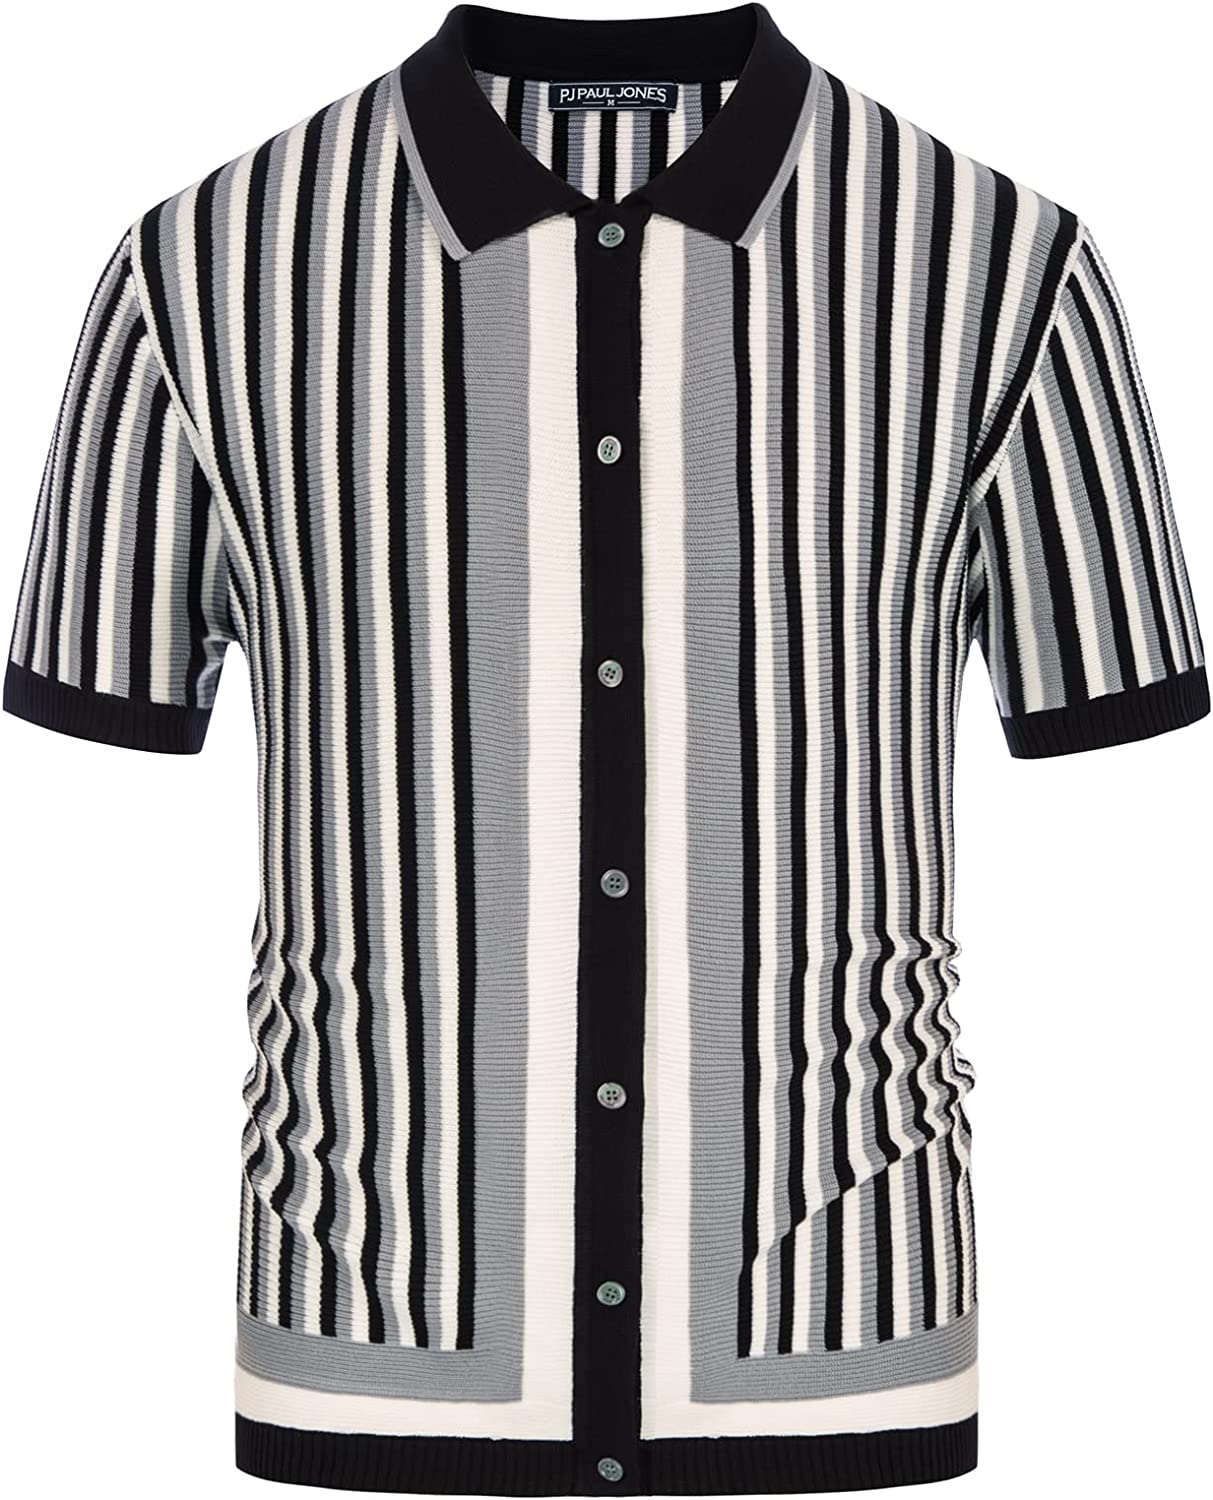 Pj Paul Jones Mens Striped Polo Shirts Breathable Knit Shirt 70s Vintage Shirt Ebay 2895